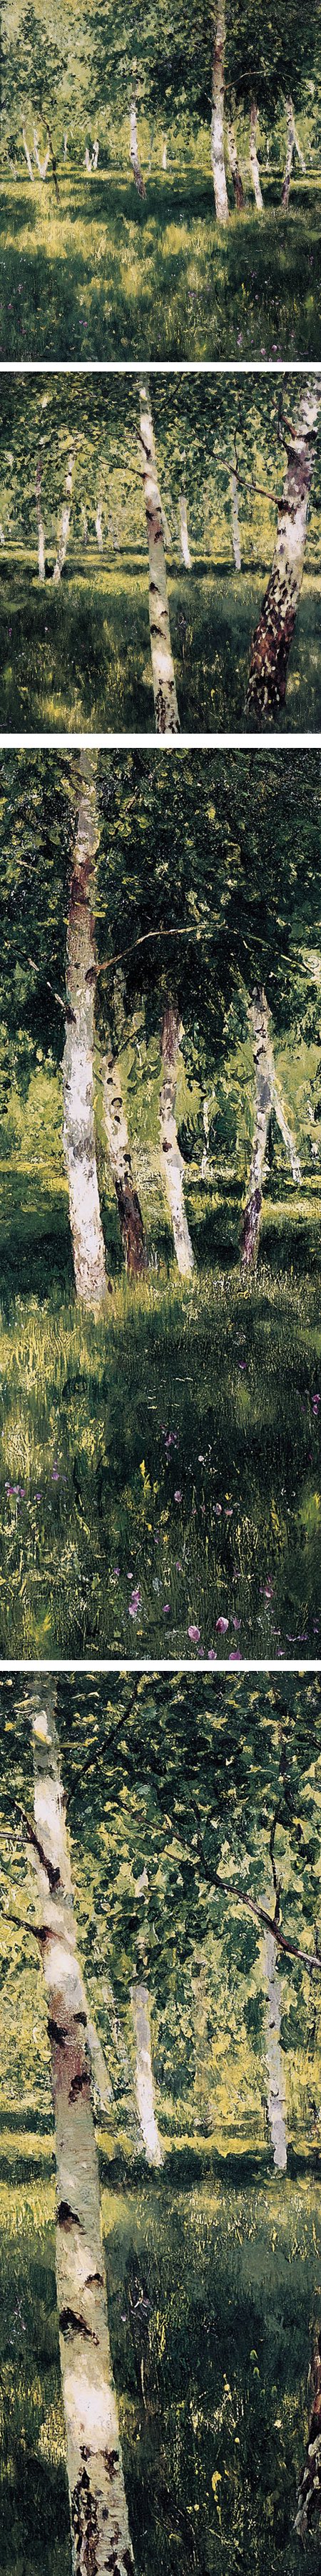 Birch Grove, landscapepainting by Russian painter Isaac Levitan (details)